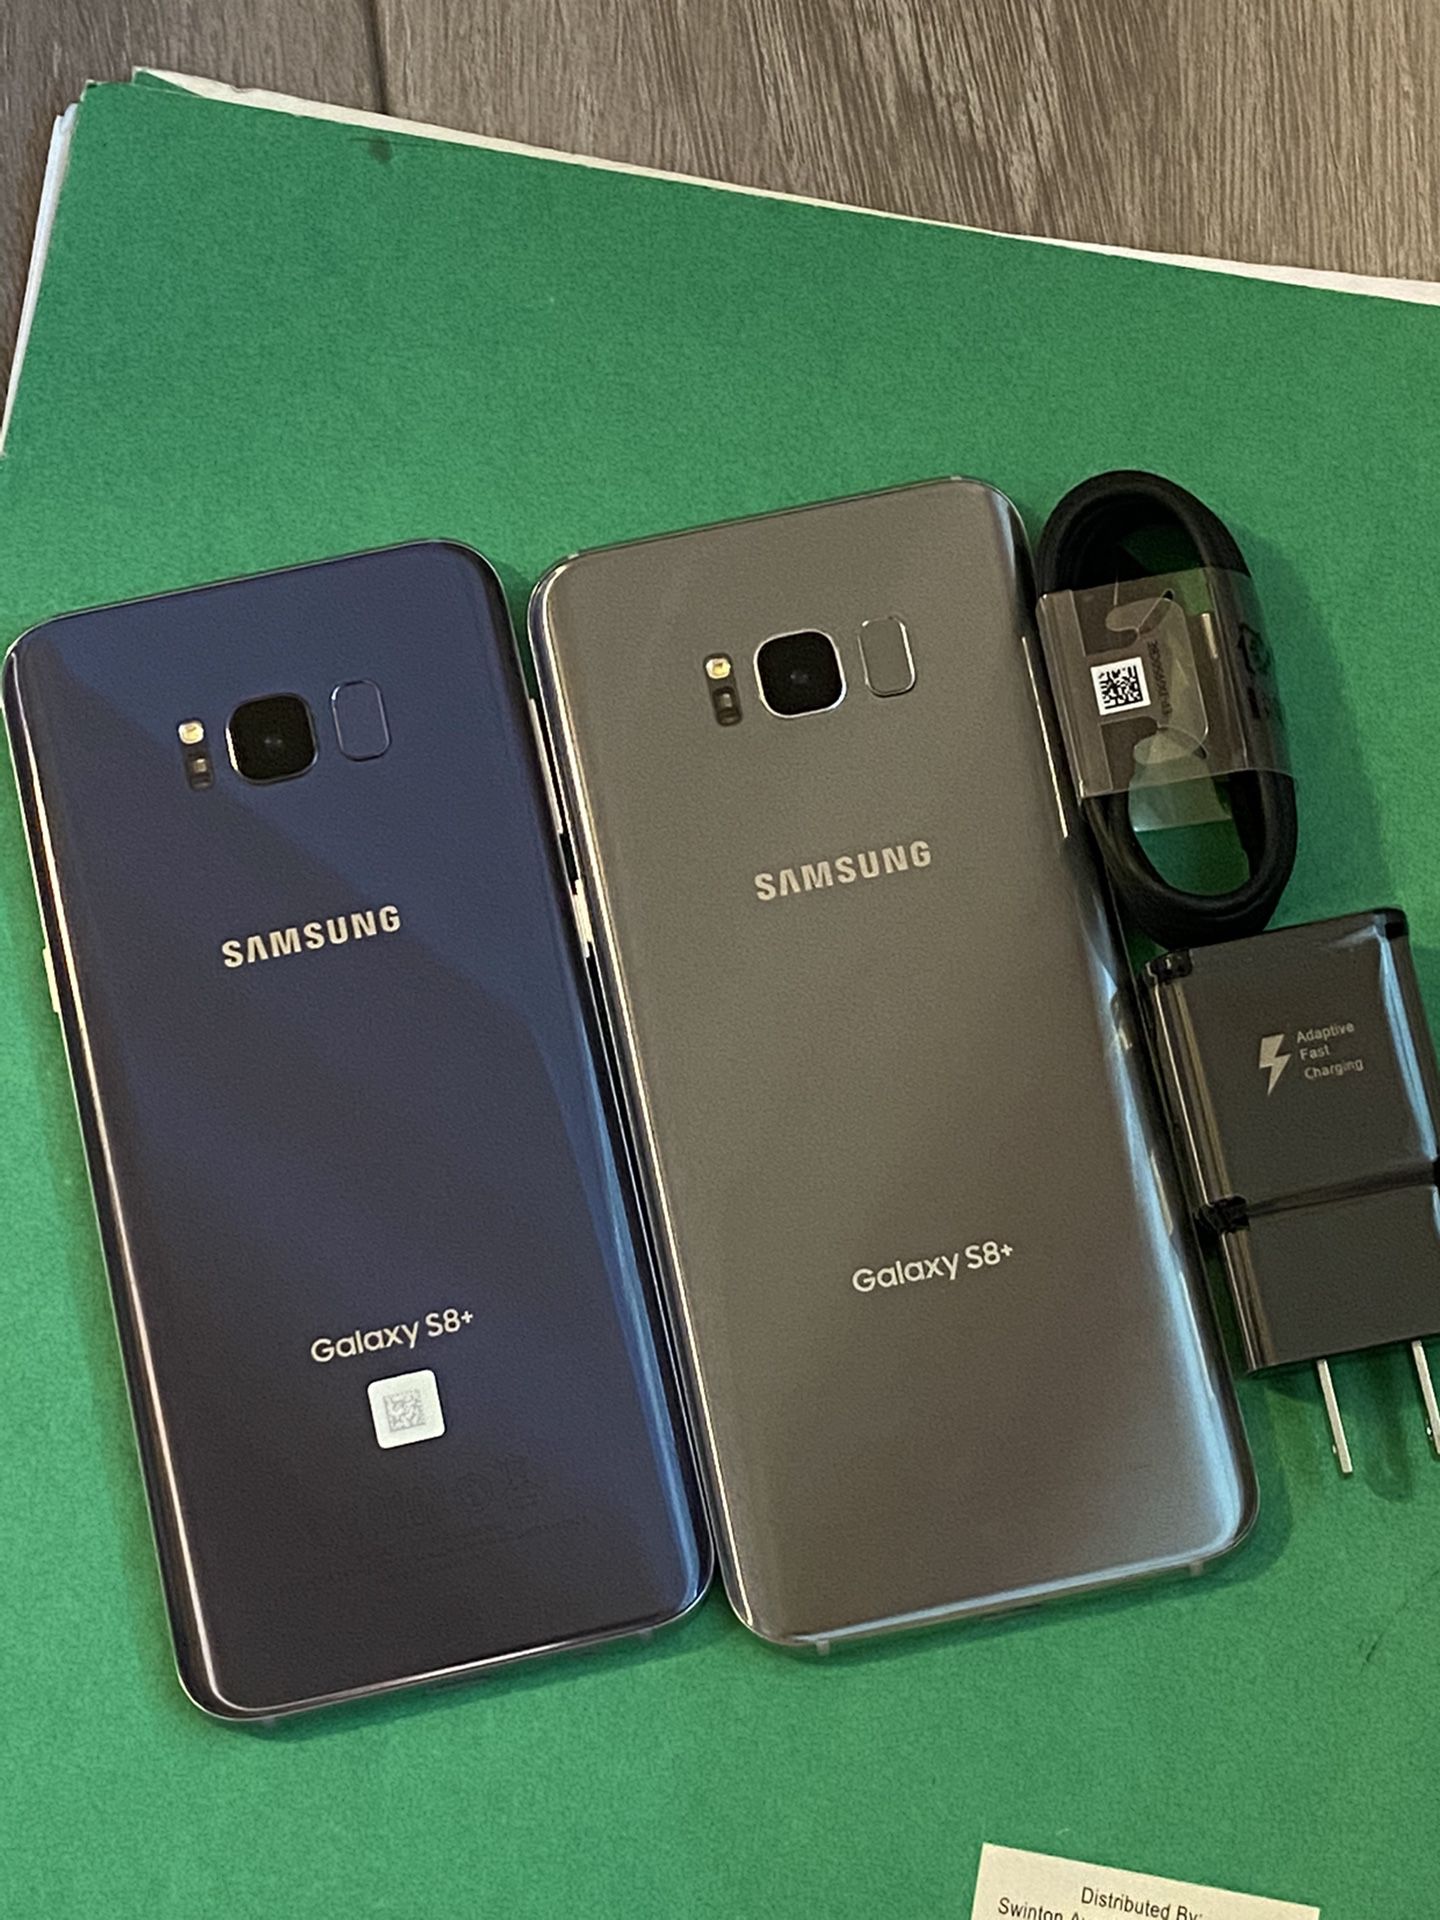 Samsung Galaxy S8 Plus (64gb) Grey And Silver UNLOCKED